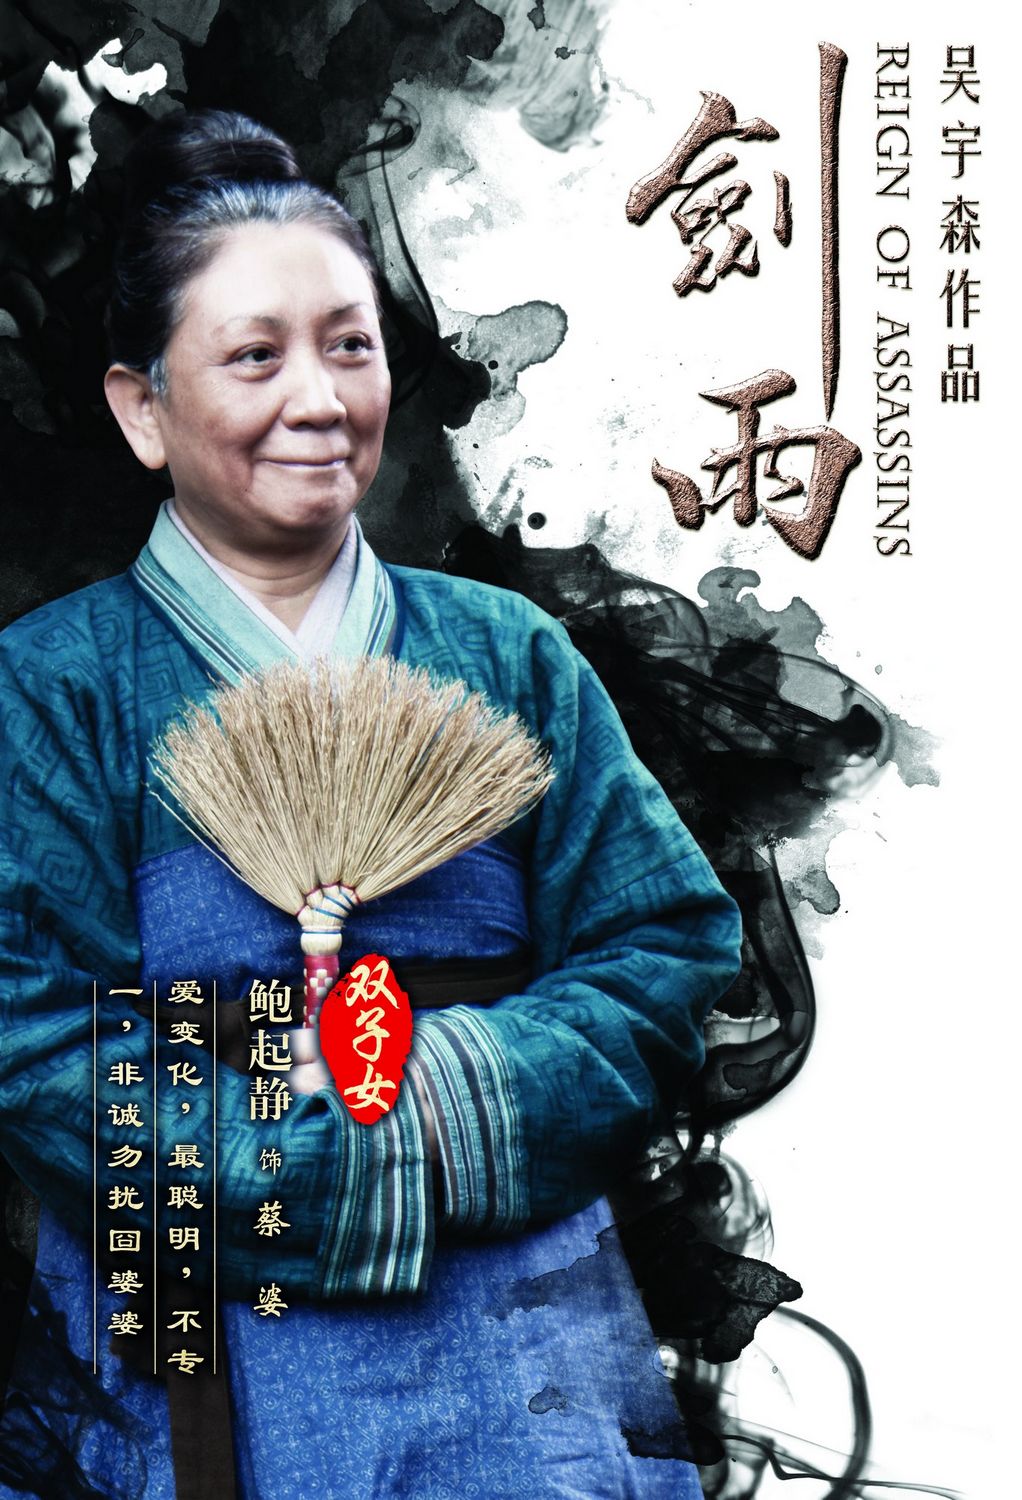 Extra Large Movie Poster Image for Jianyu (#5 of 11)